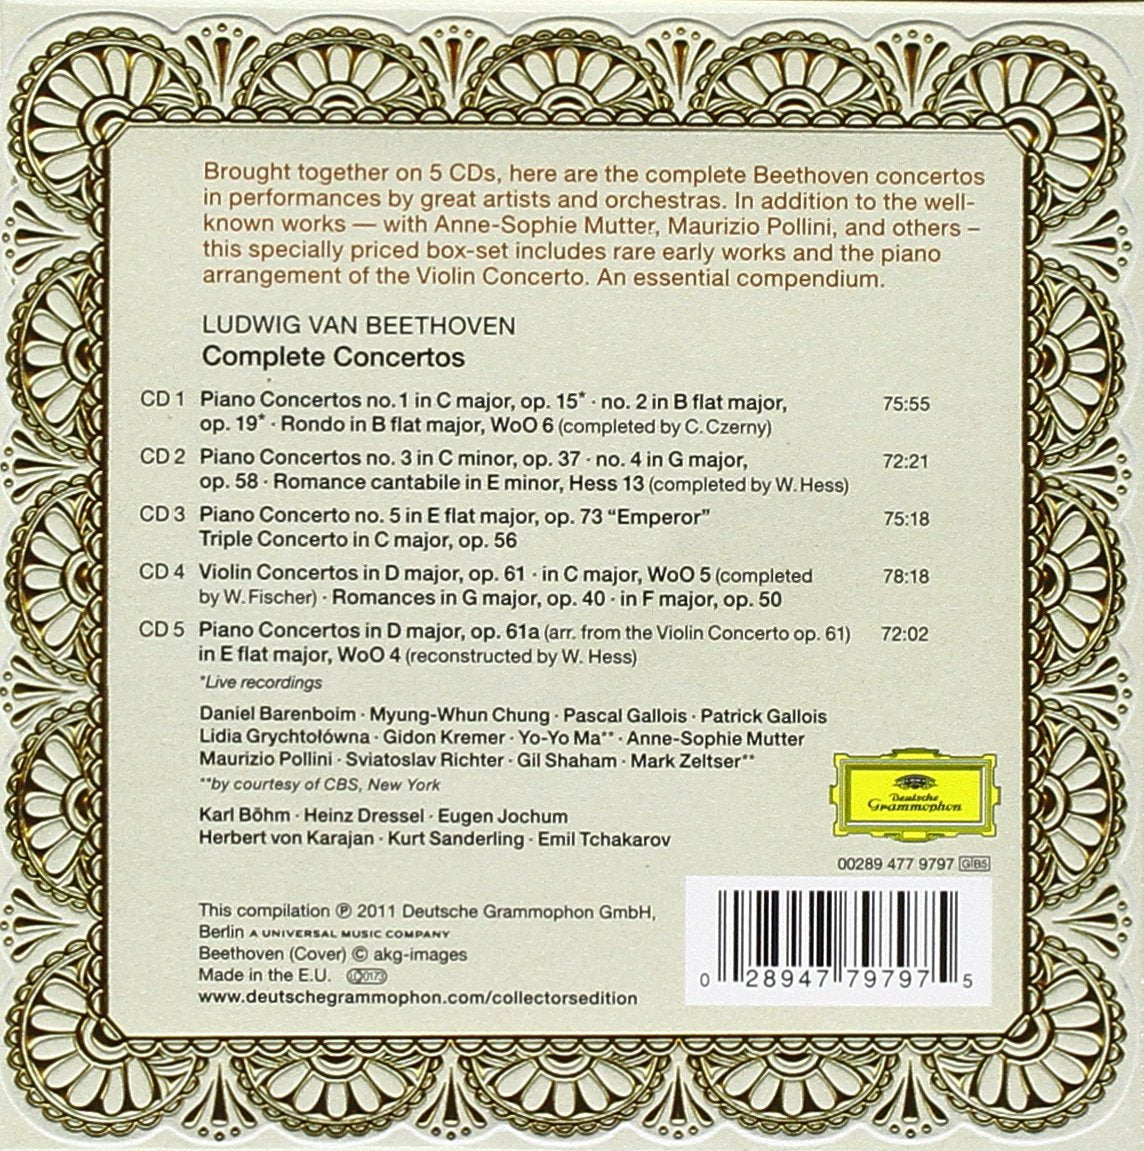 Beethoven: Complete Concertos (Kremer, Barenboim, Mutter, Pollini - 5 CDs)